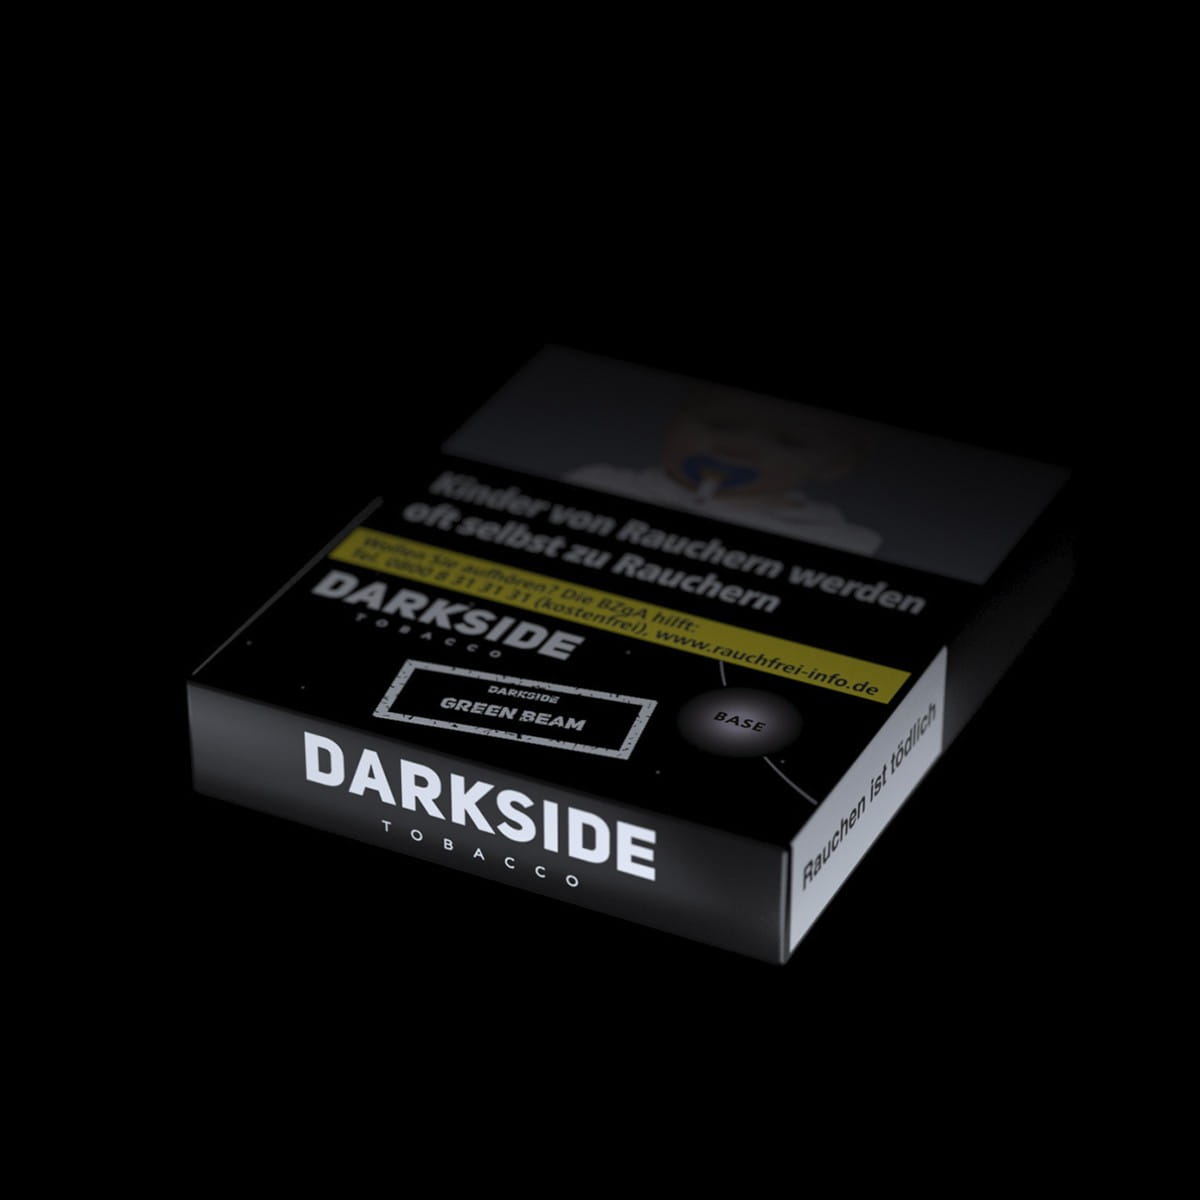 Darkside Base Tabak - Green Beam 200 g unter Shisha Tabak / Darkside Tobacco / Base Line